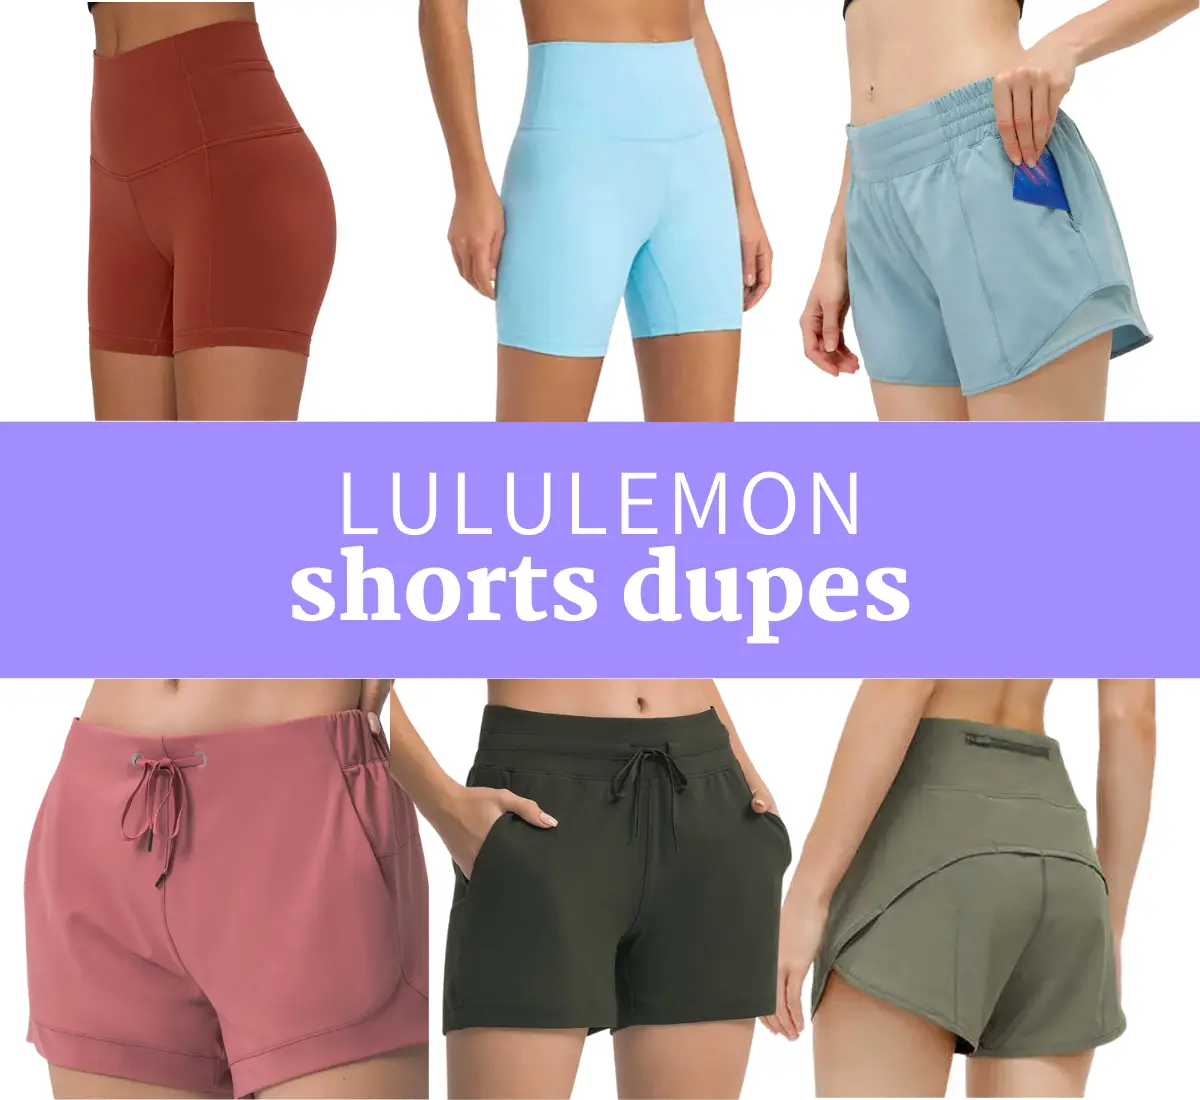 Top 4 best lululemon shorts dupes (under $25)